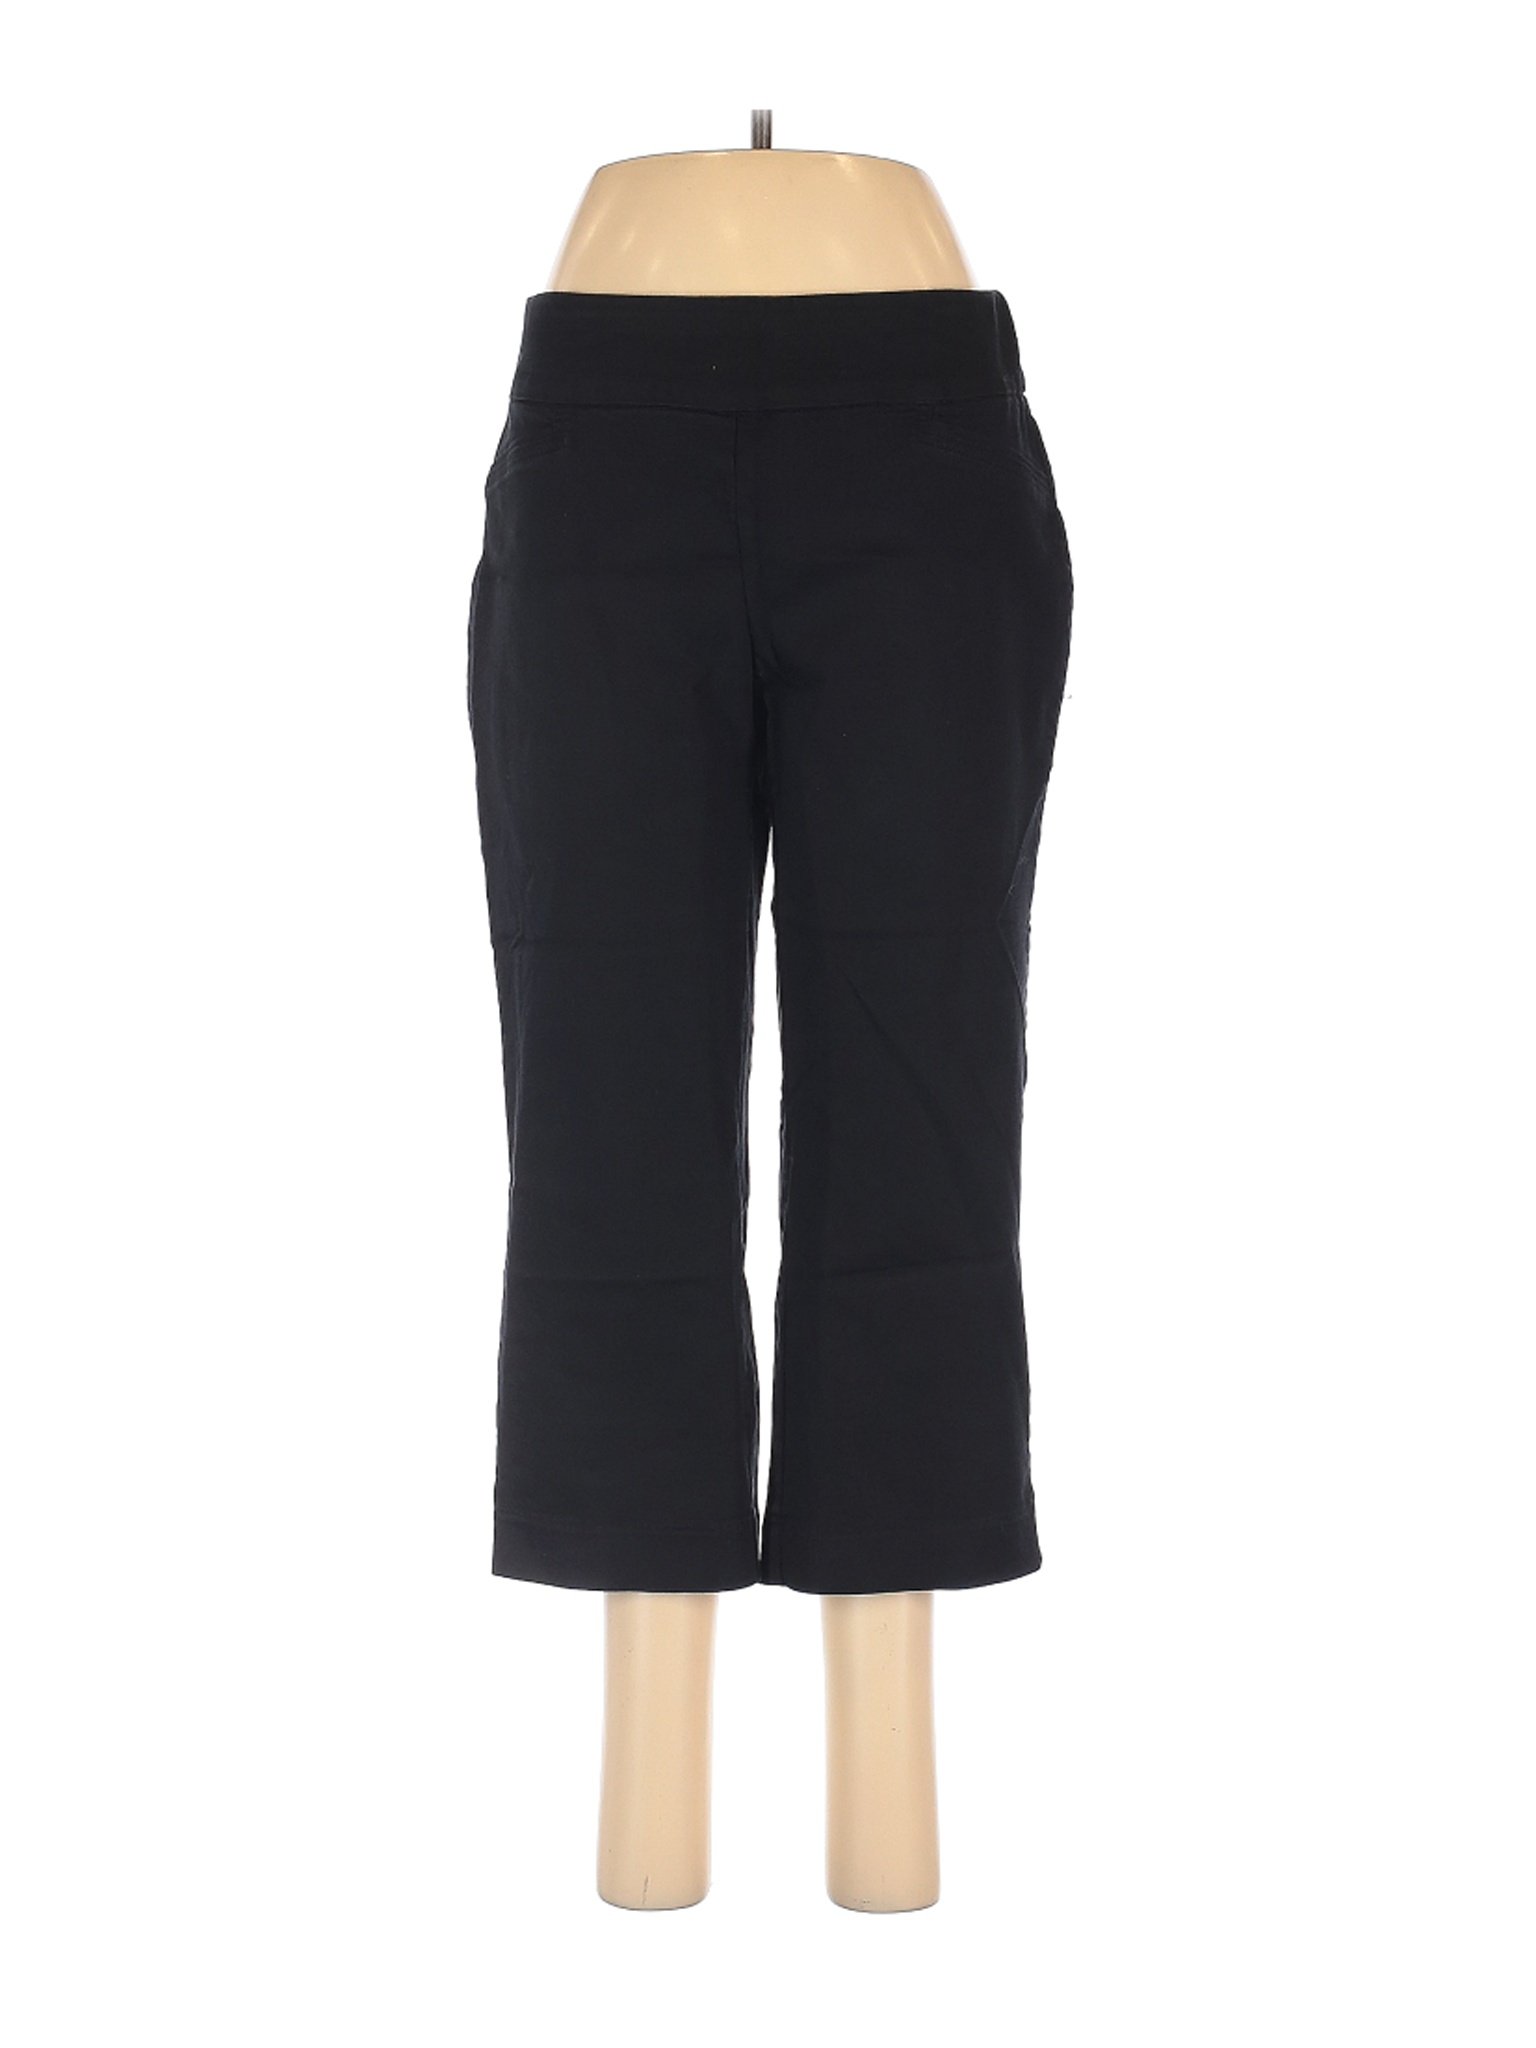 Croft & Barrow Women Black Casual Pants 8 | eBay